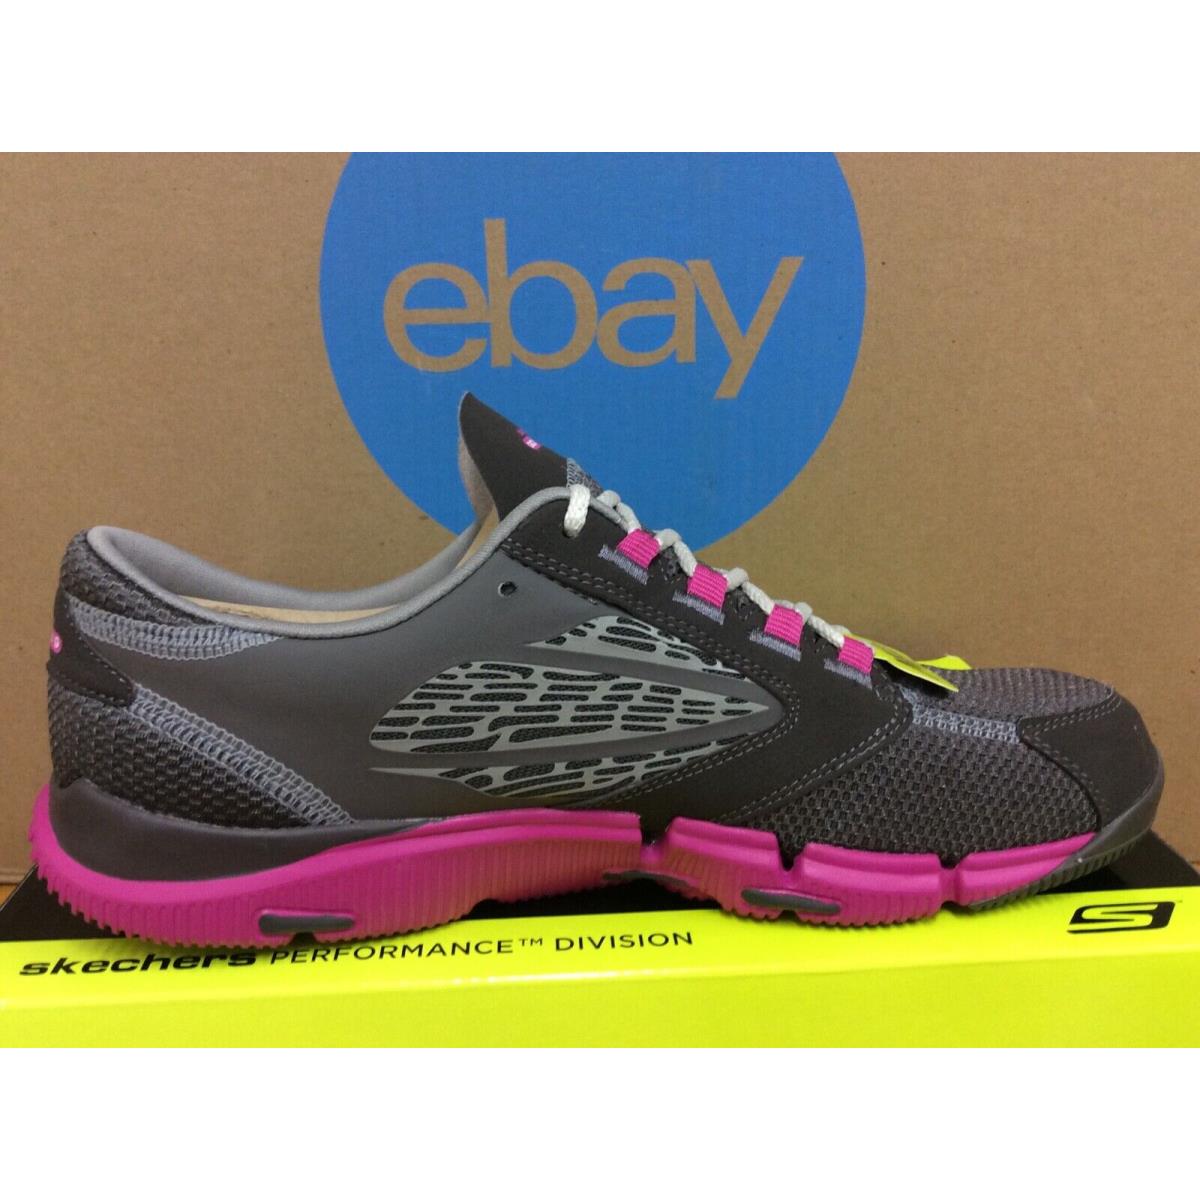 Skechers shoes Bionic Ride - Charcoal Hot Pink 8